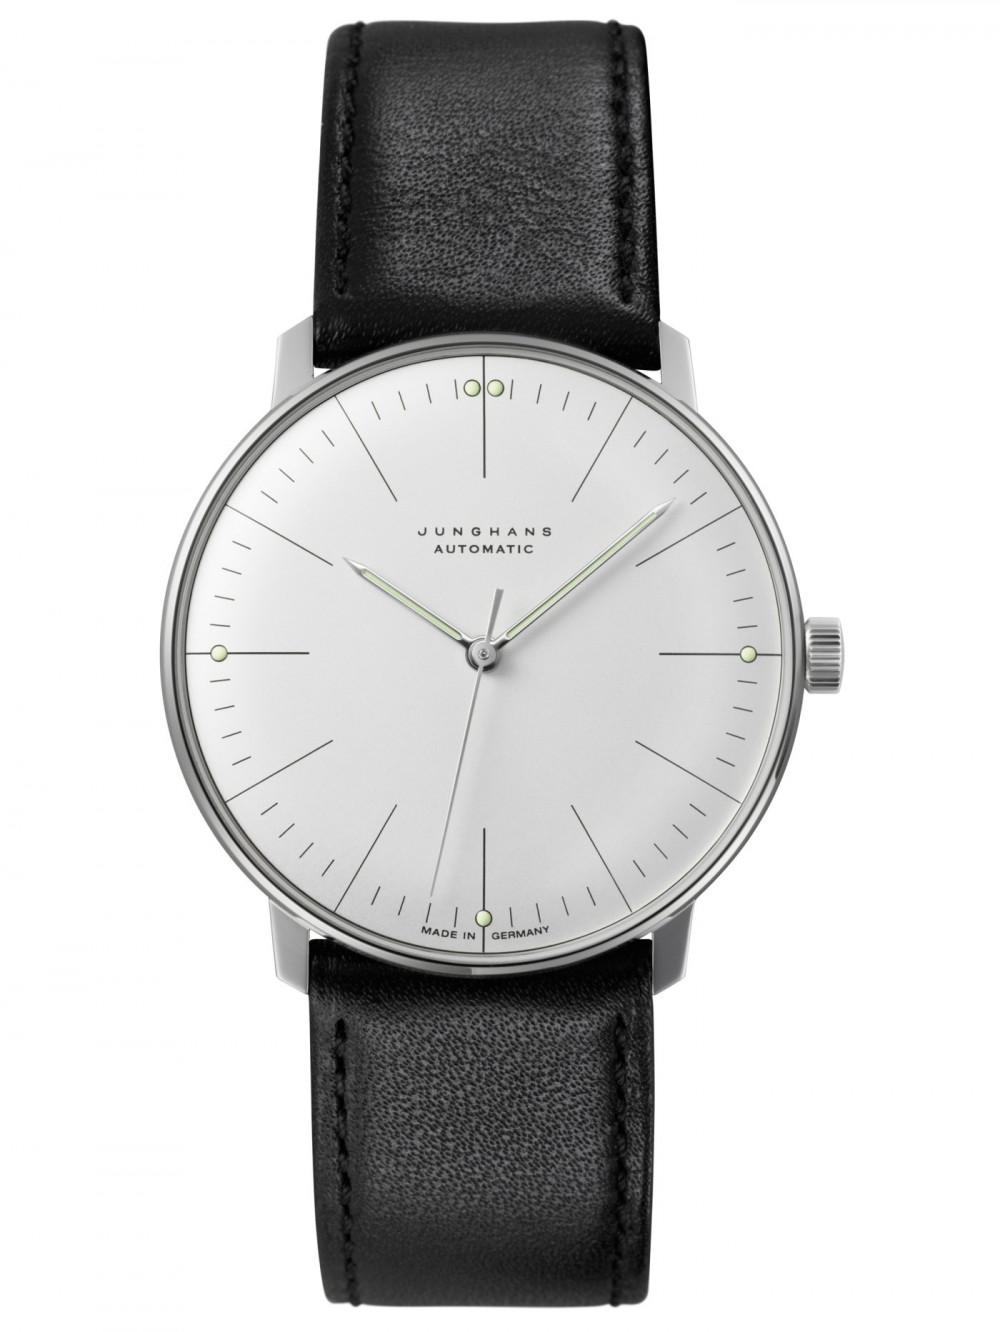 Zegarek firmy Junghans, model max bill Automatic